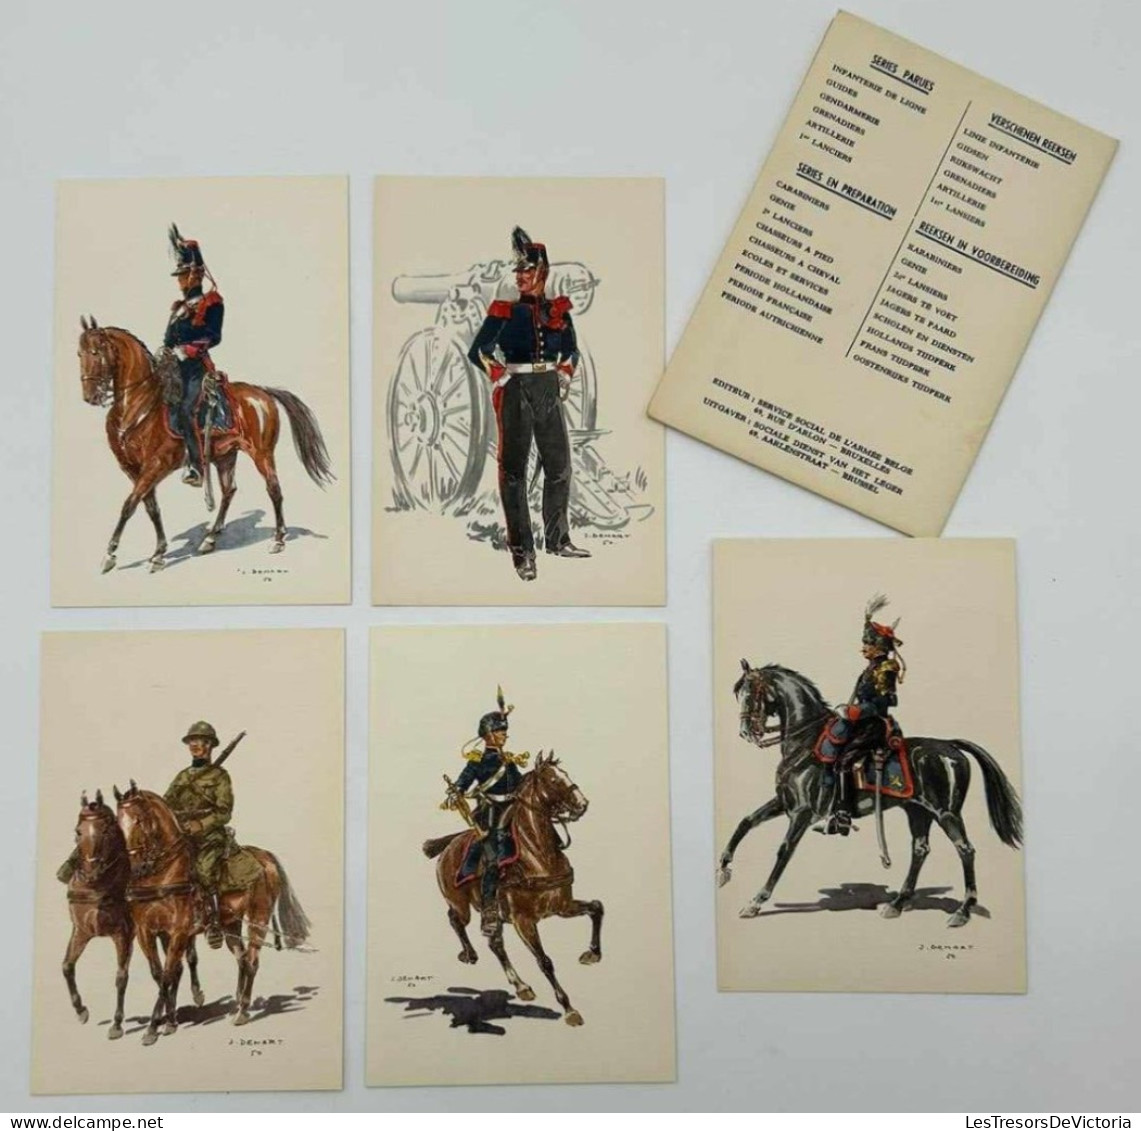 Cartes Postales Anciennes - J.demart - Artillerie - Costumes Militaires Belges - Lot De 5 Cpa - Uniformi